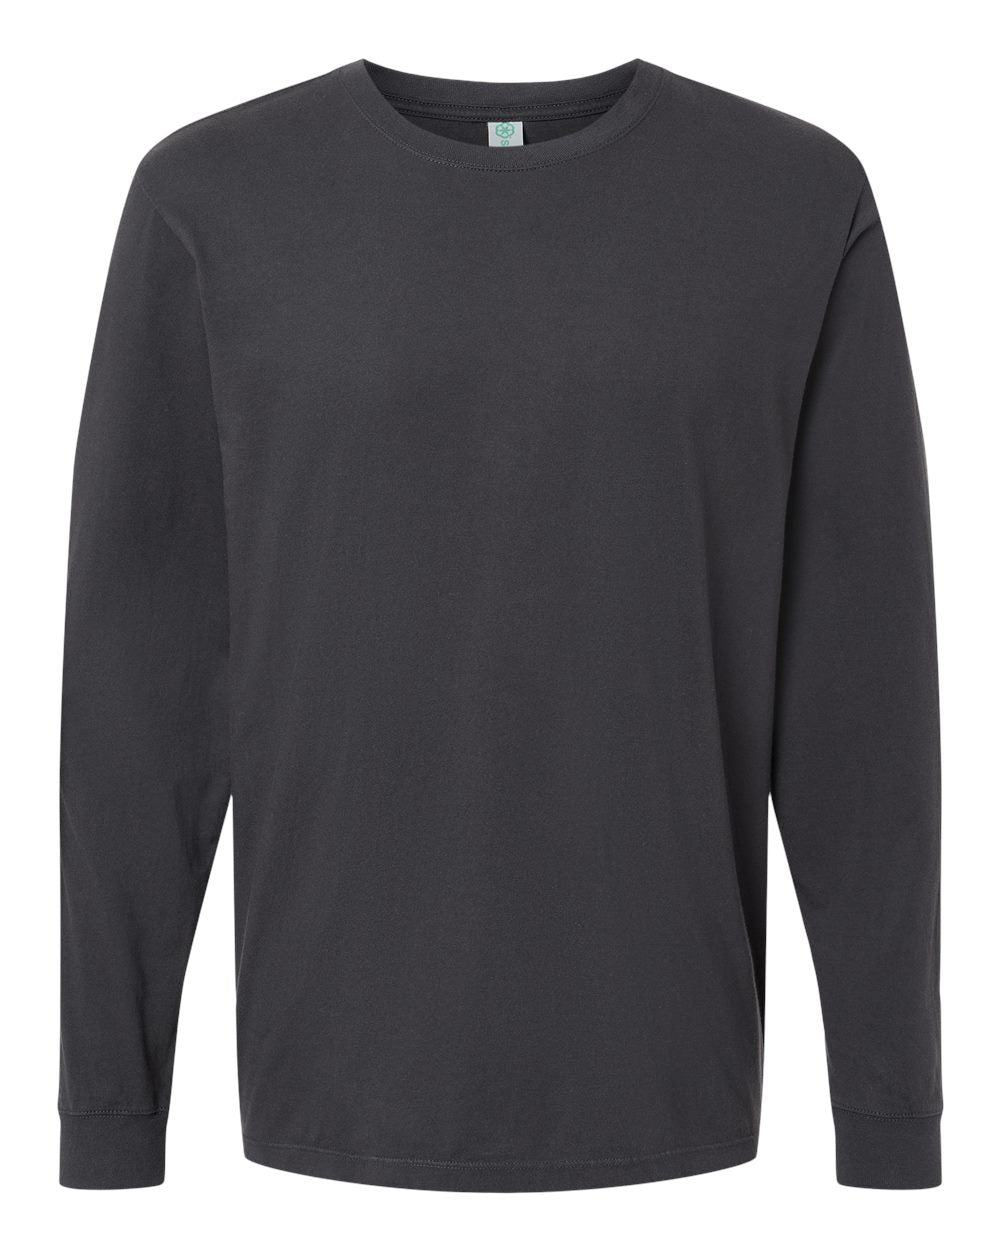 Softshirts® Unisex Organic Cotton Long-Sleeve Shirt in black